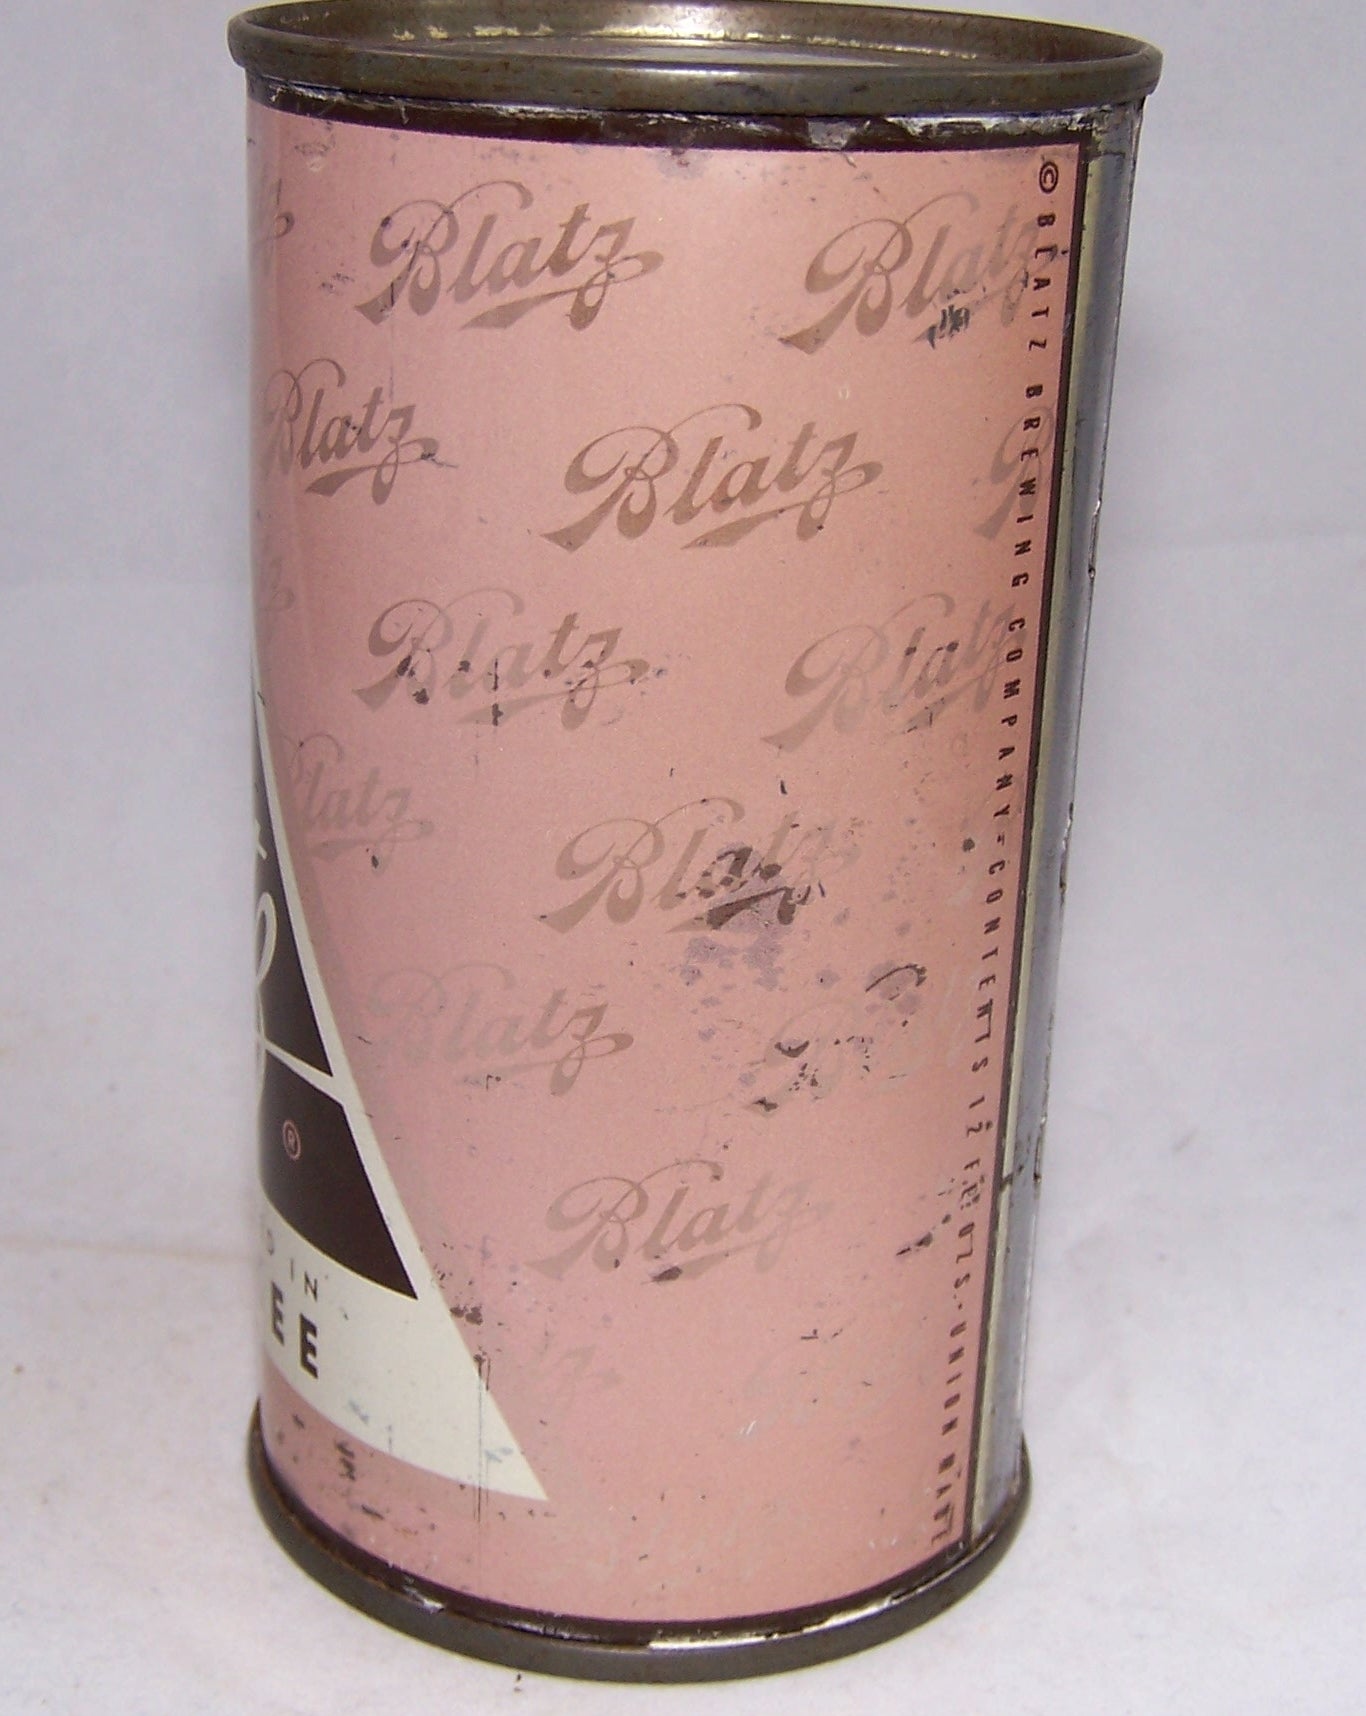 Blatz set can (Pink) USBC 39-15, Grade  1- Sold on 09/10/17